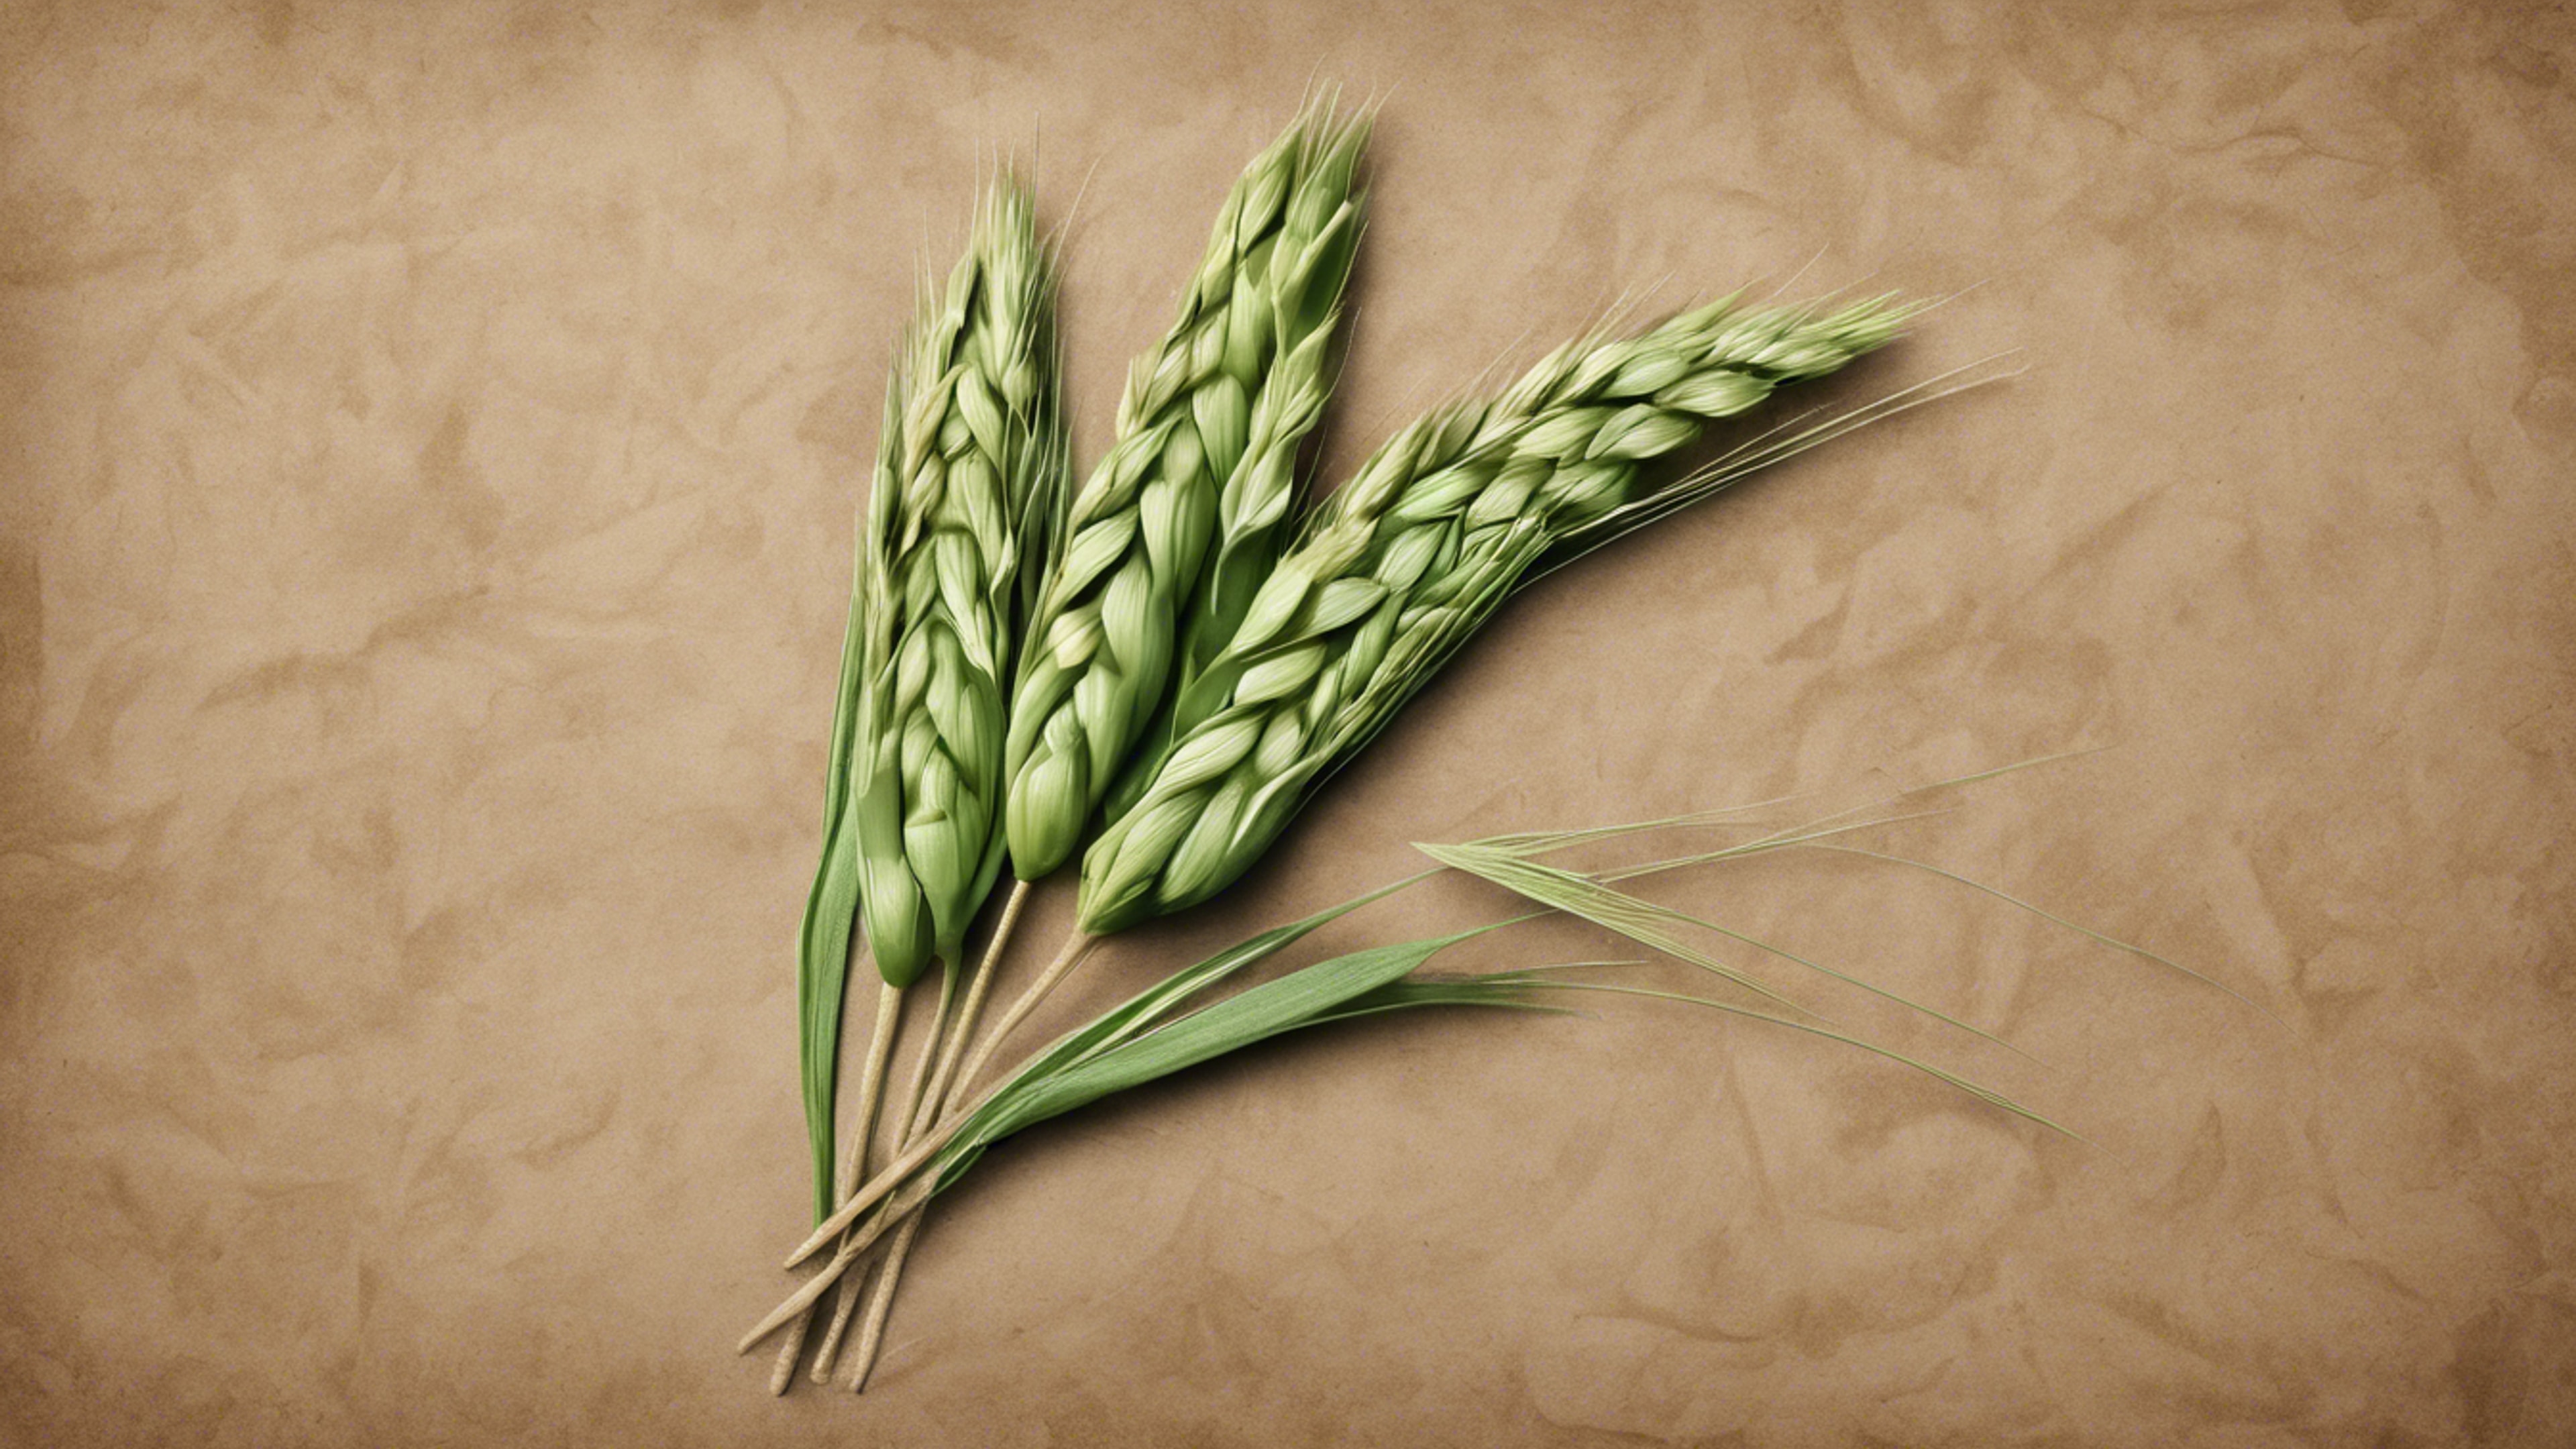 A detailed botanical illustration of a stalk of green wheat against an aged brown paper background. duvar kağıdı[958050ab552342b3bed0]